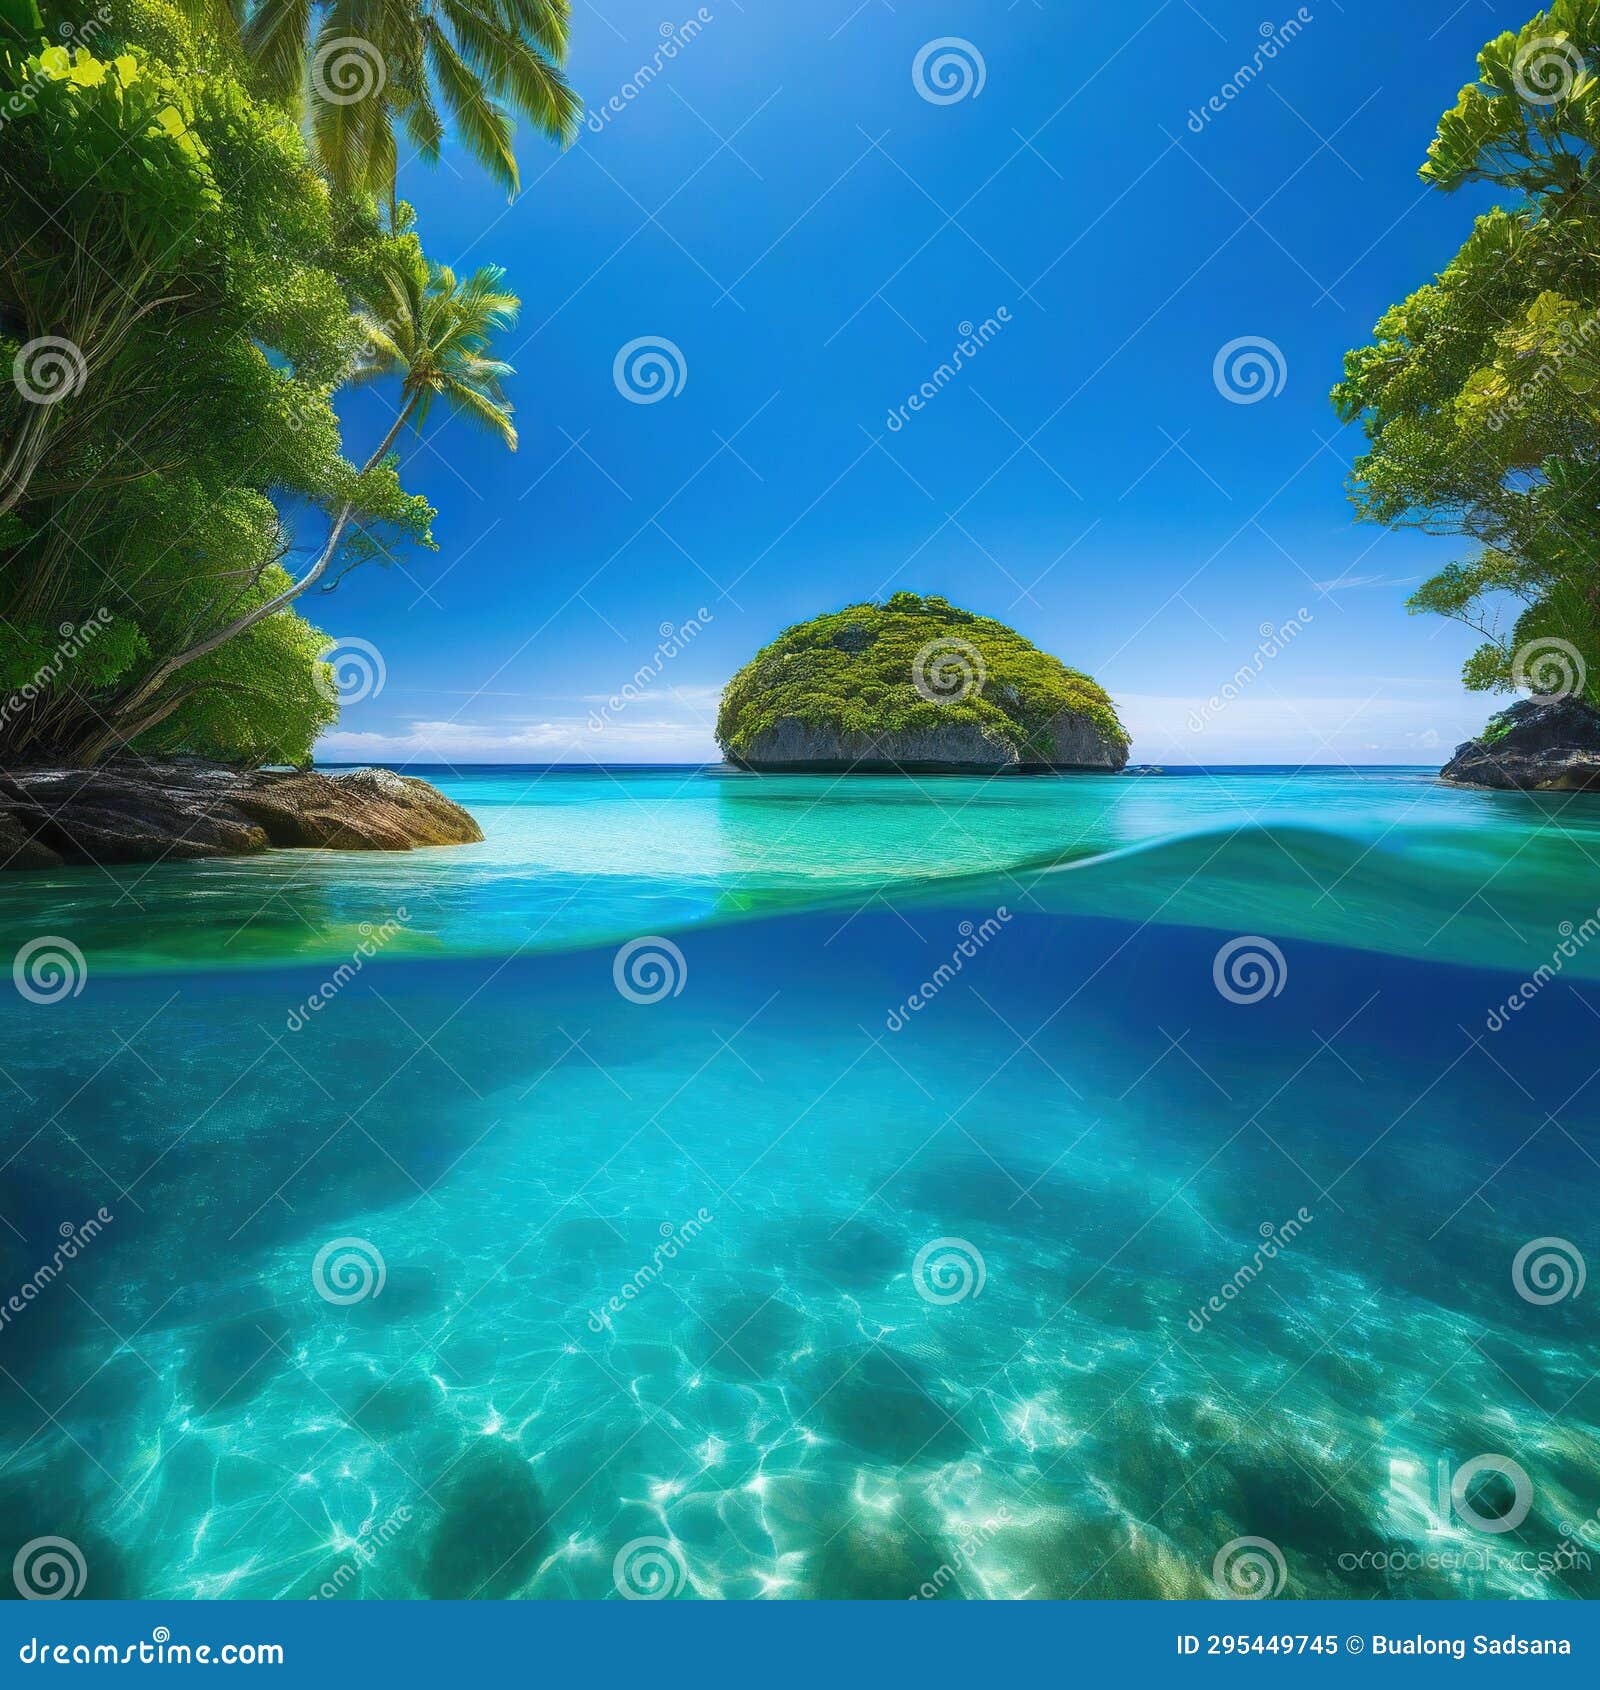 transparÃÂªncia da ÃÂ¡gua do mar em uma paisagem paradisÃÂ­aca criado por ia